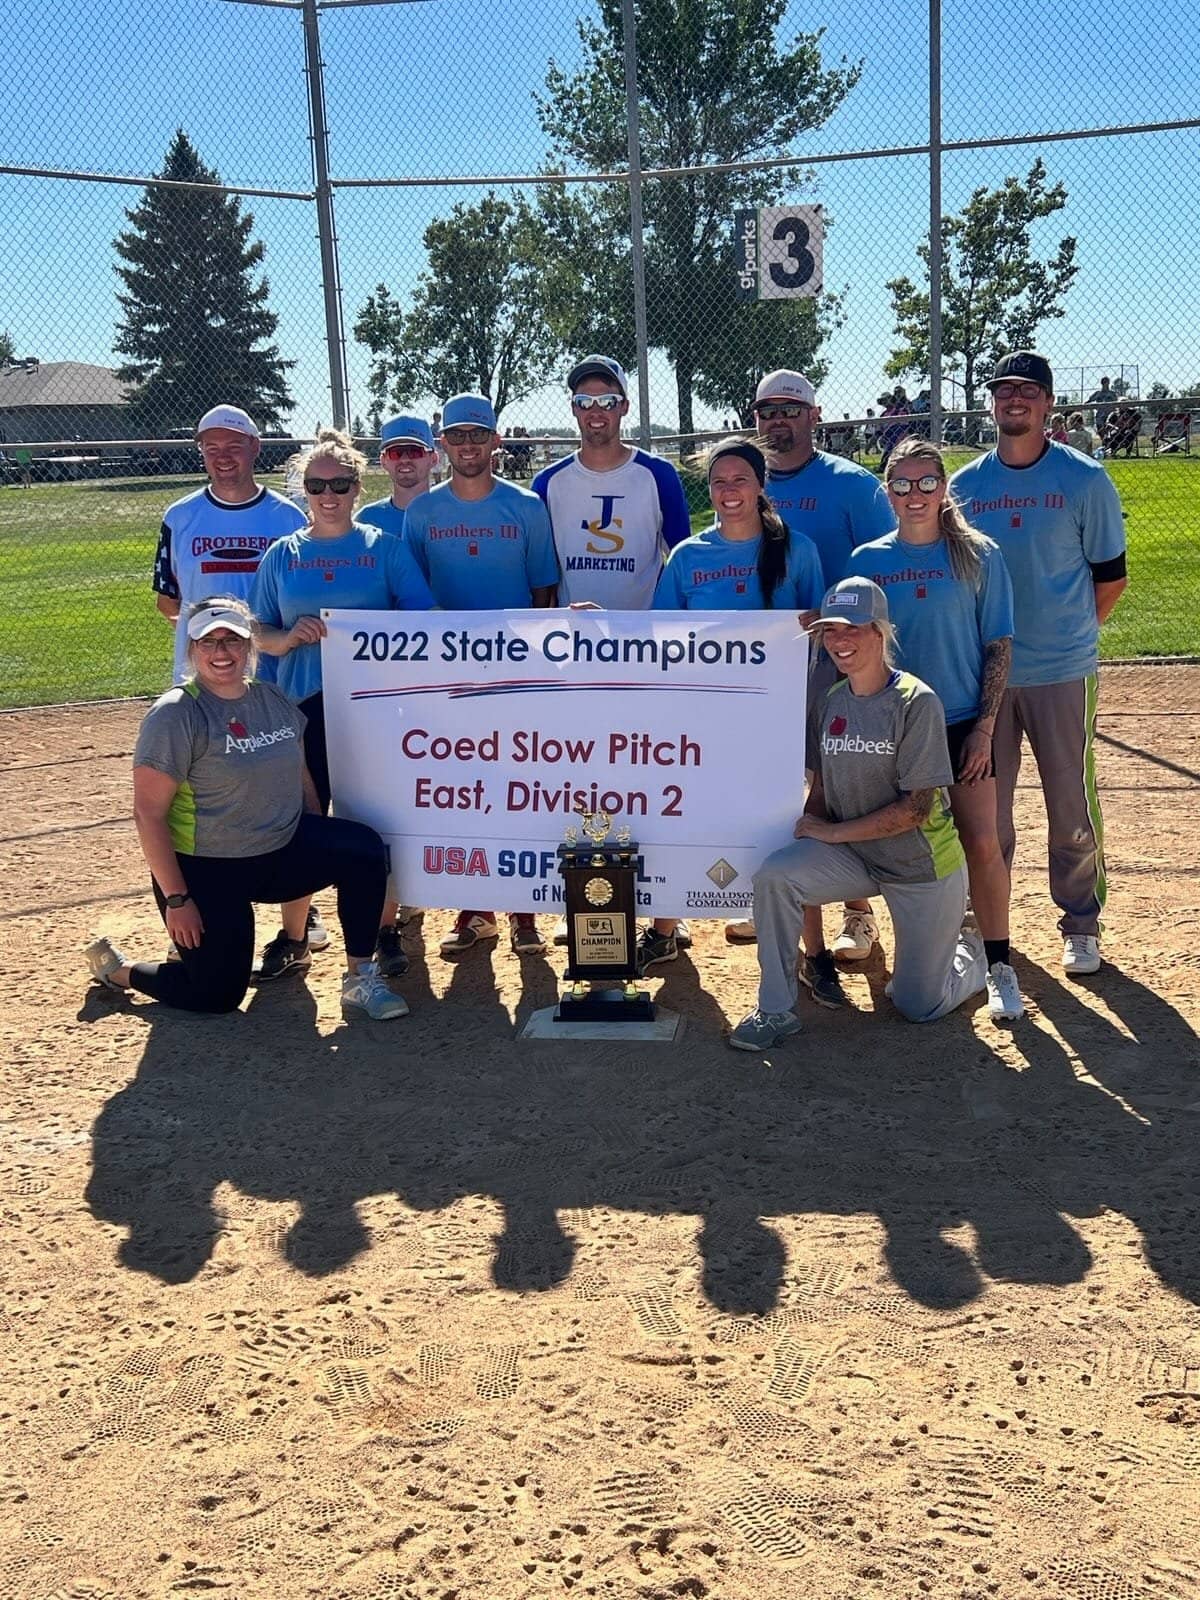 Brothers III / Dakota Silver Wins North Dakota State Softball Championship